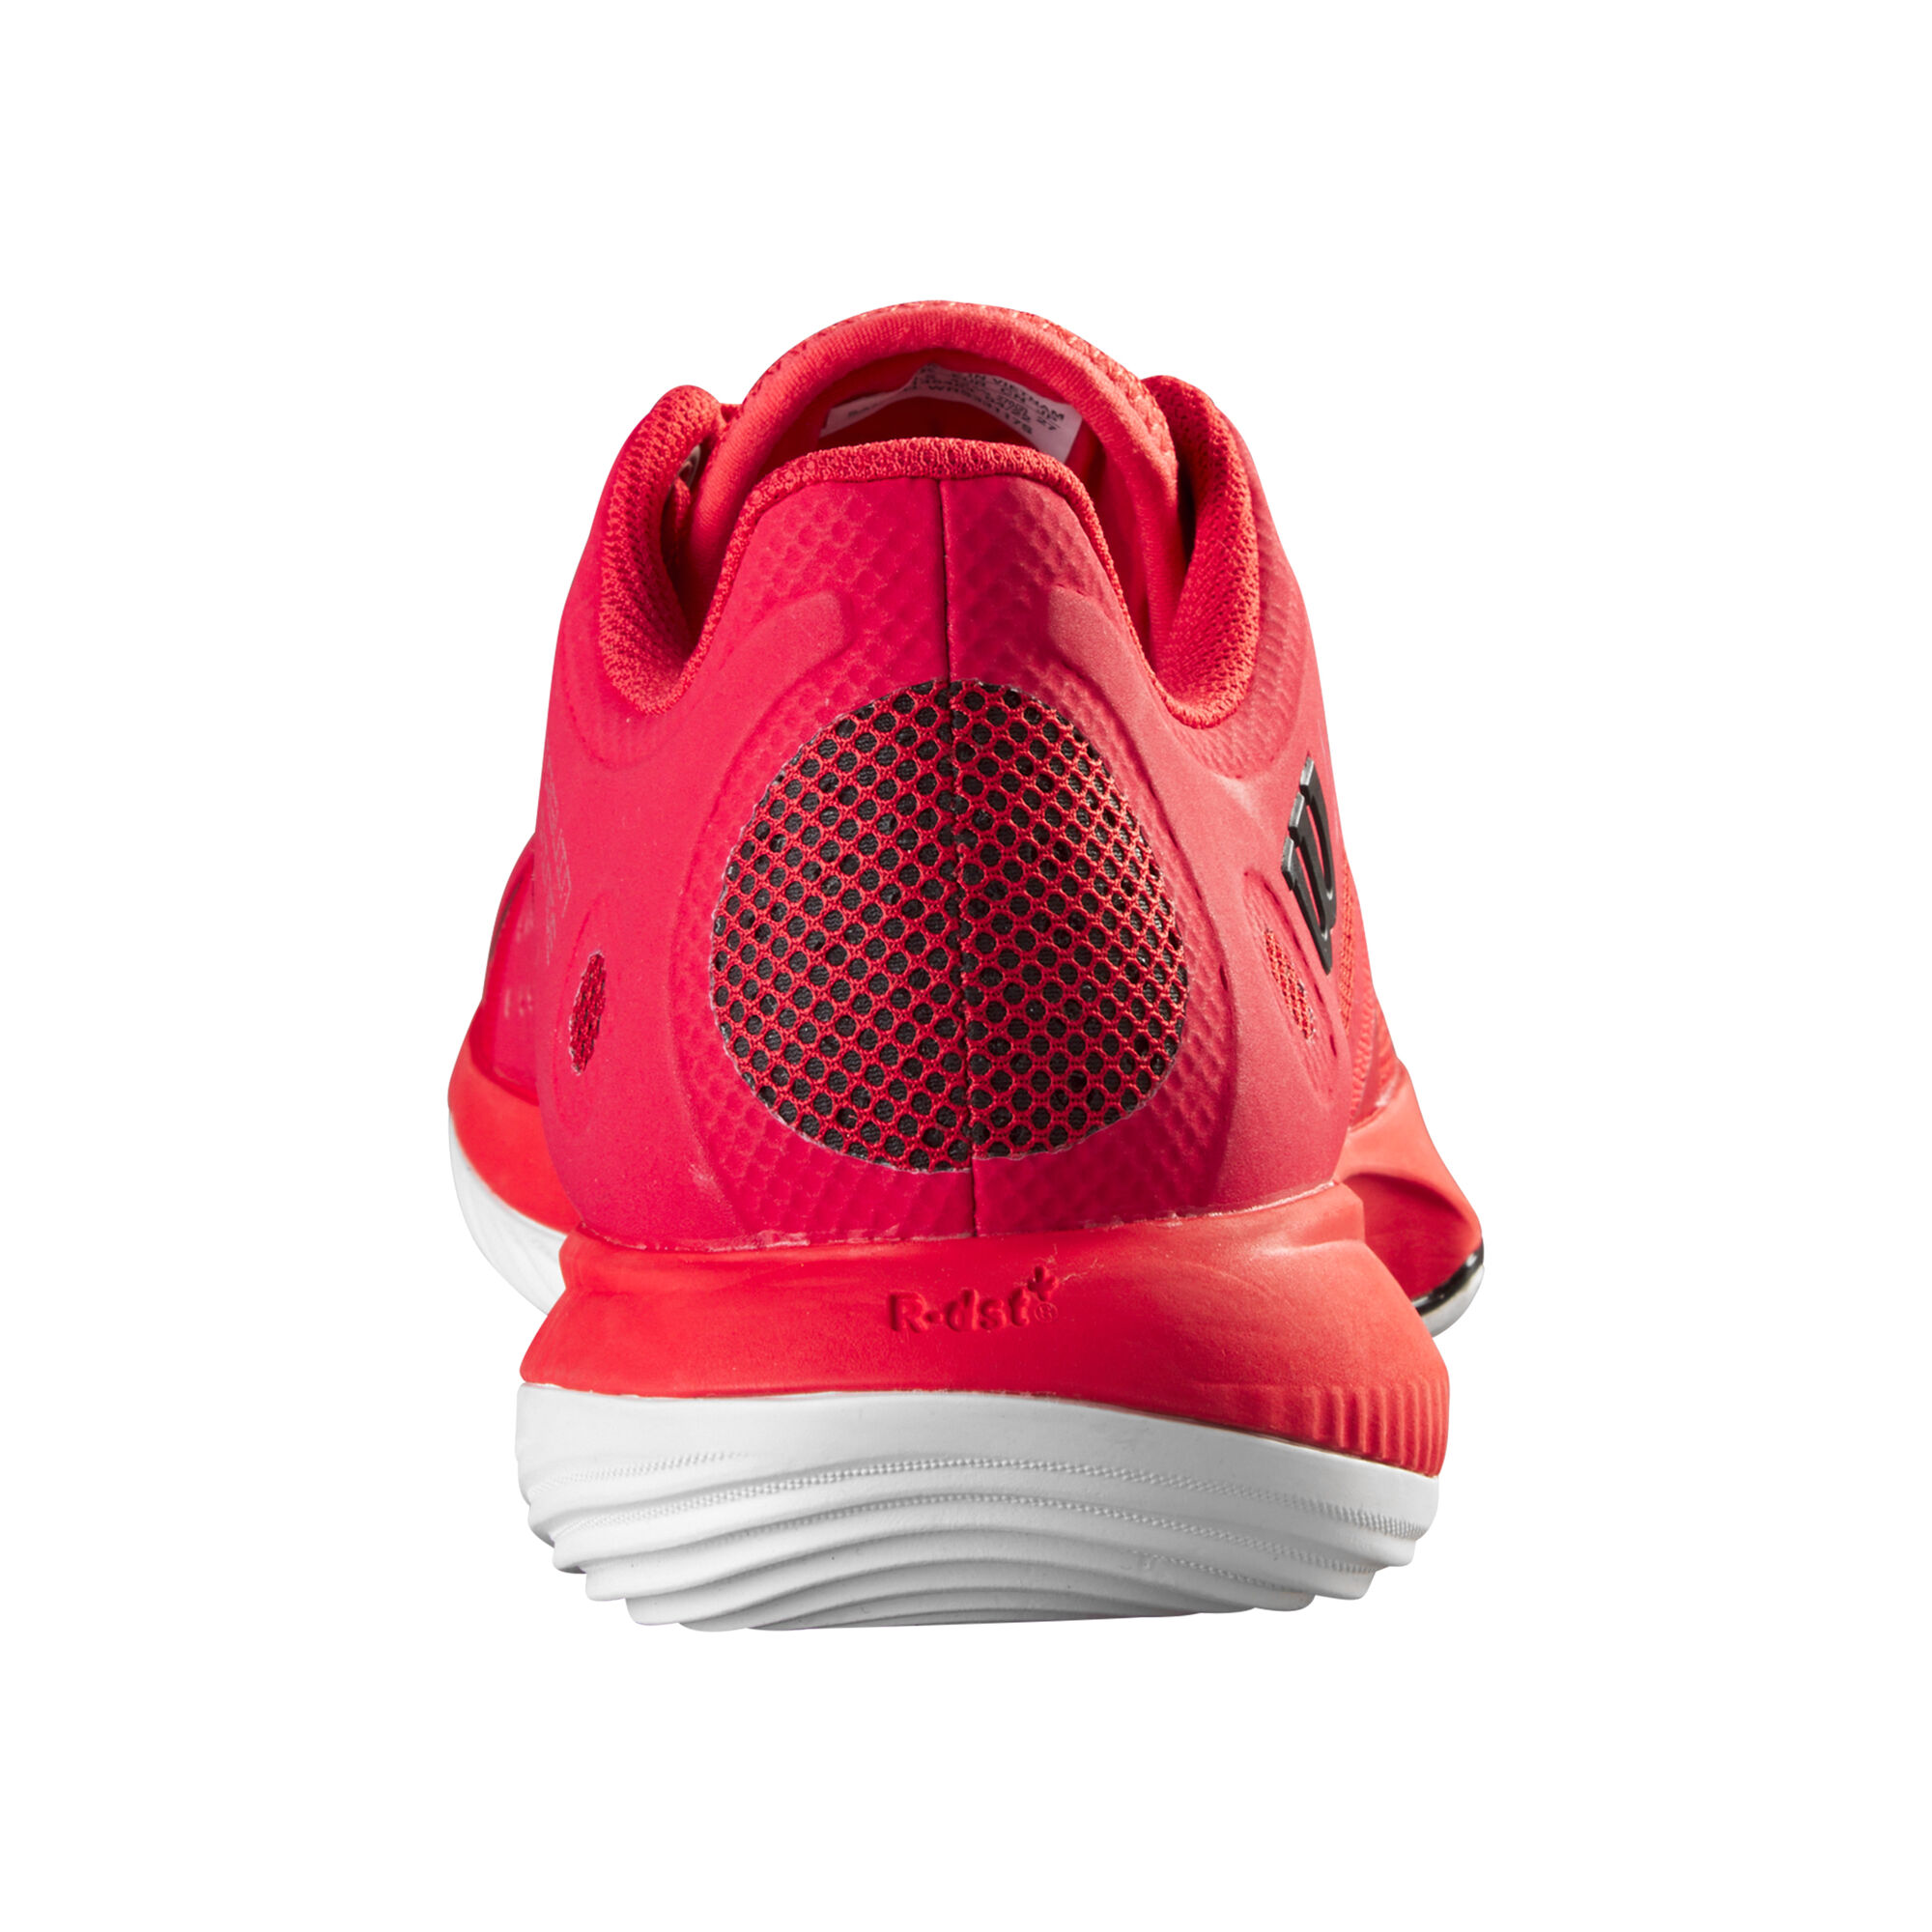 Lima freír florero buy Wilson Bela Pro Red Padel Shoe Men - Red, White online | Tennis-Point